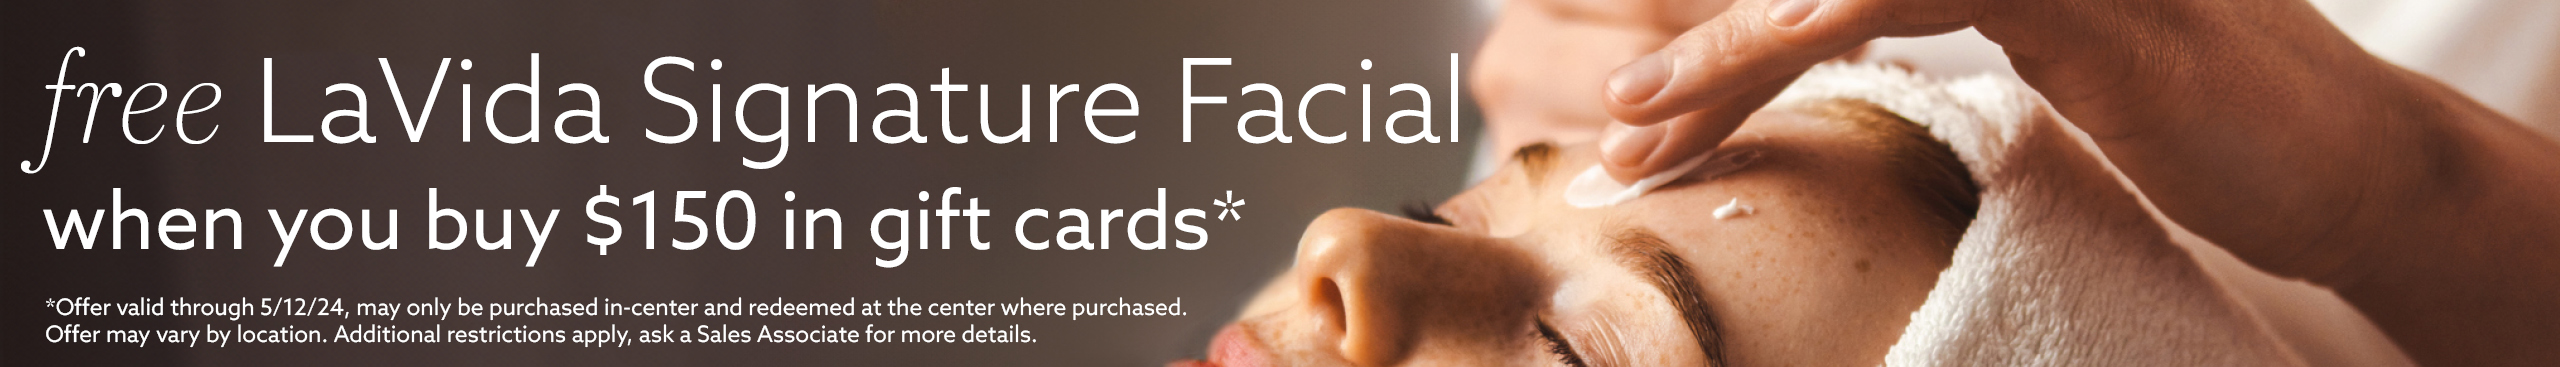 Buy $150 in Gift Cards, Get a free LaVida Signature Facial